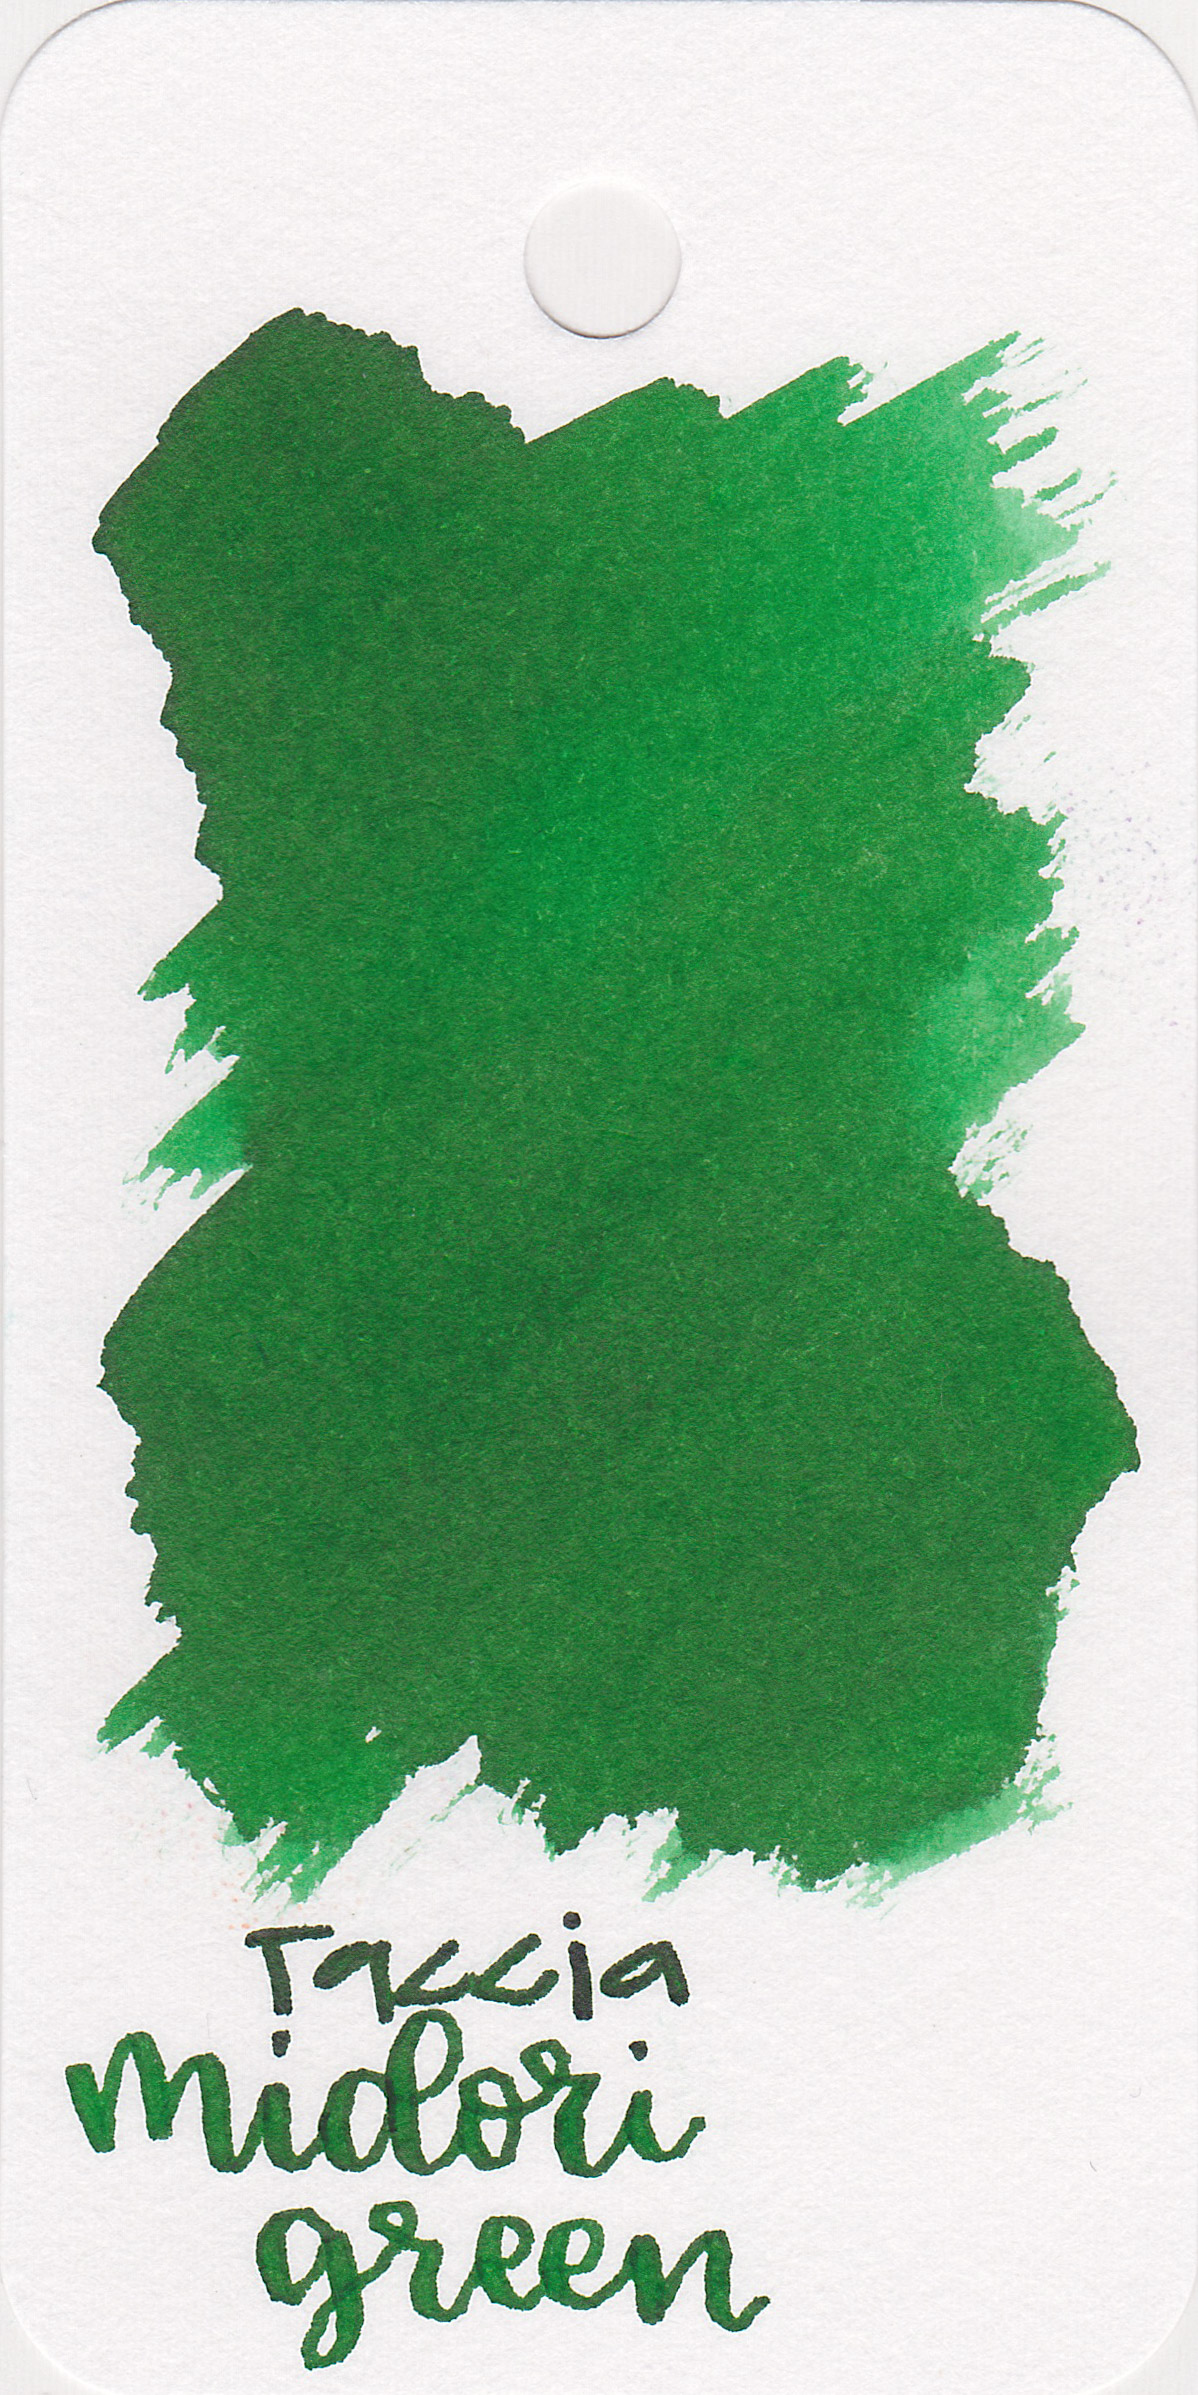 tac-midori-green-1.jpg